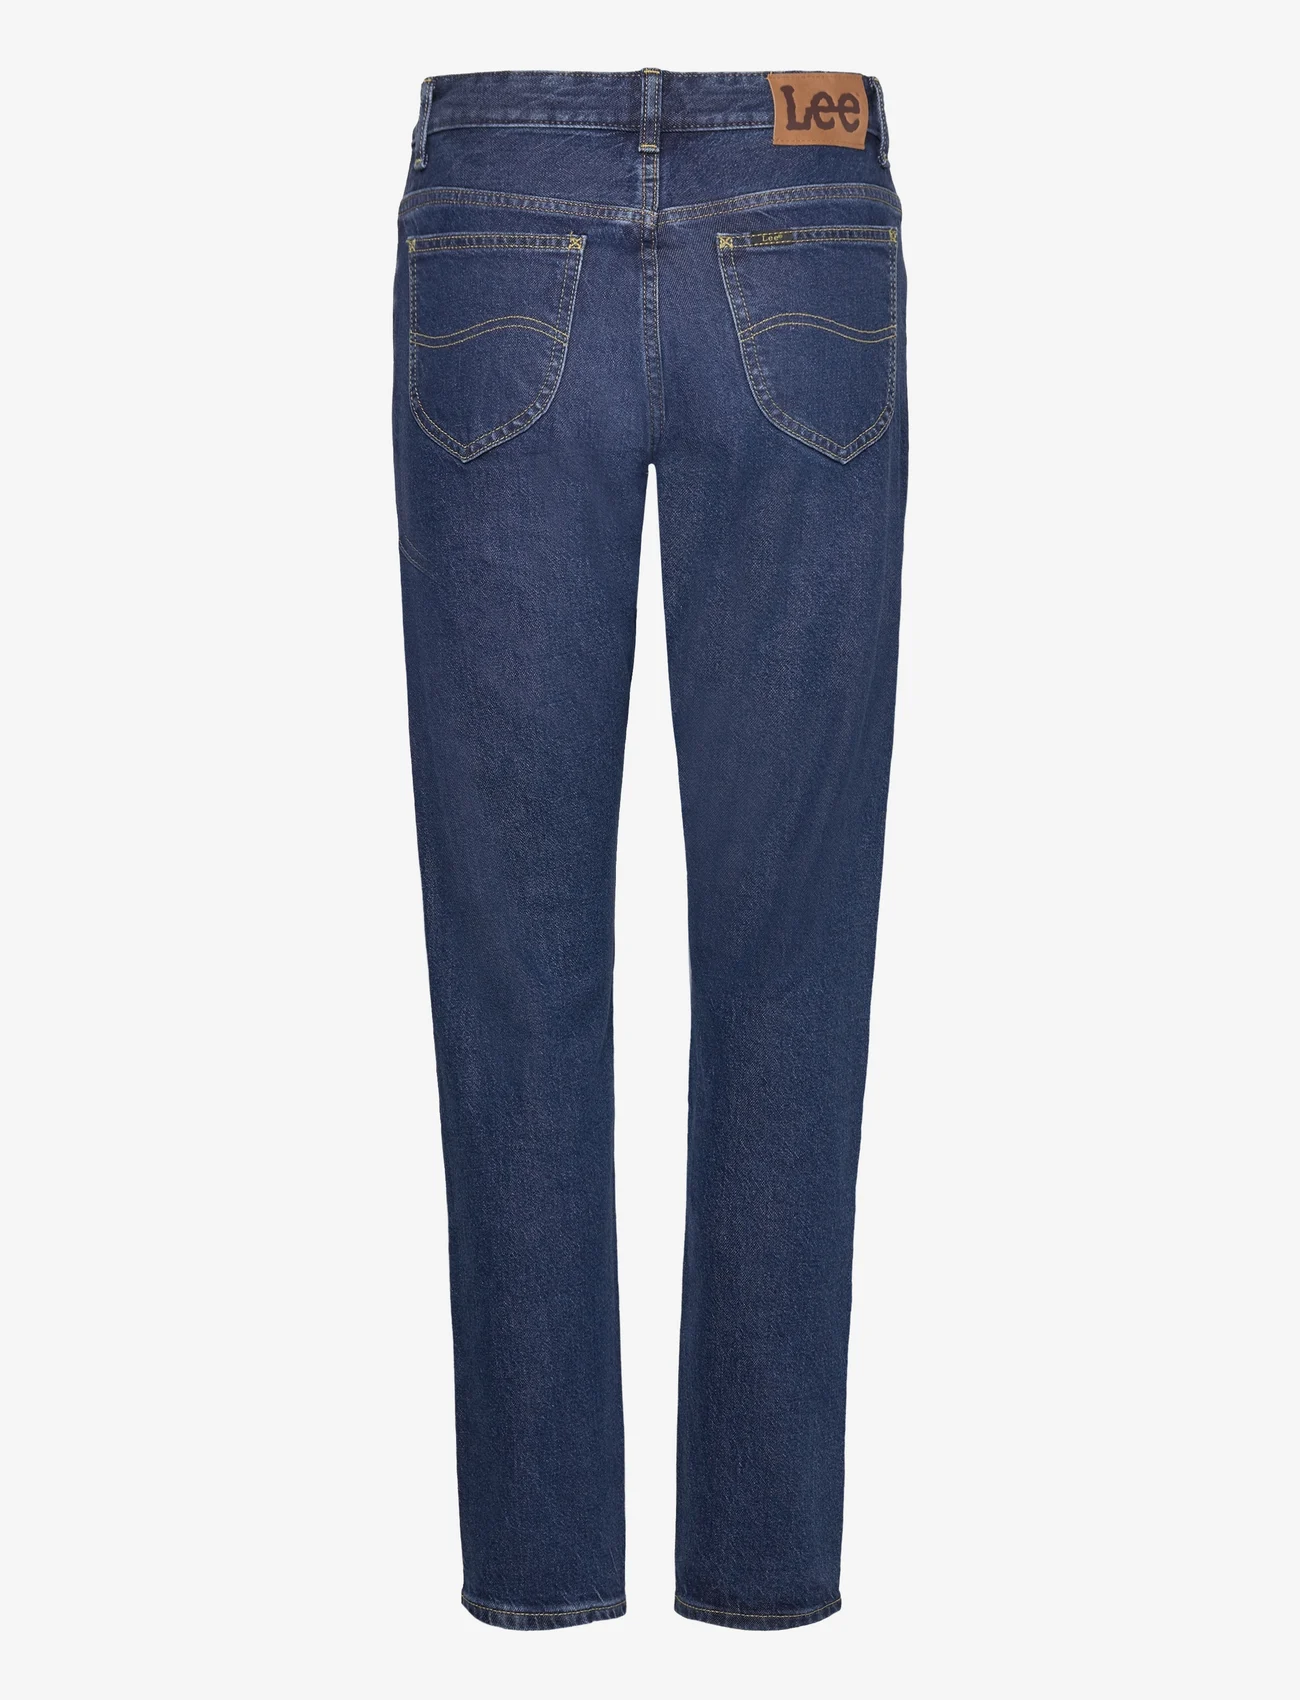 Lee Jeans - RIDER JEANS - slim fit jeans - blue nostalgia - 1